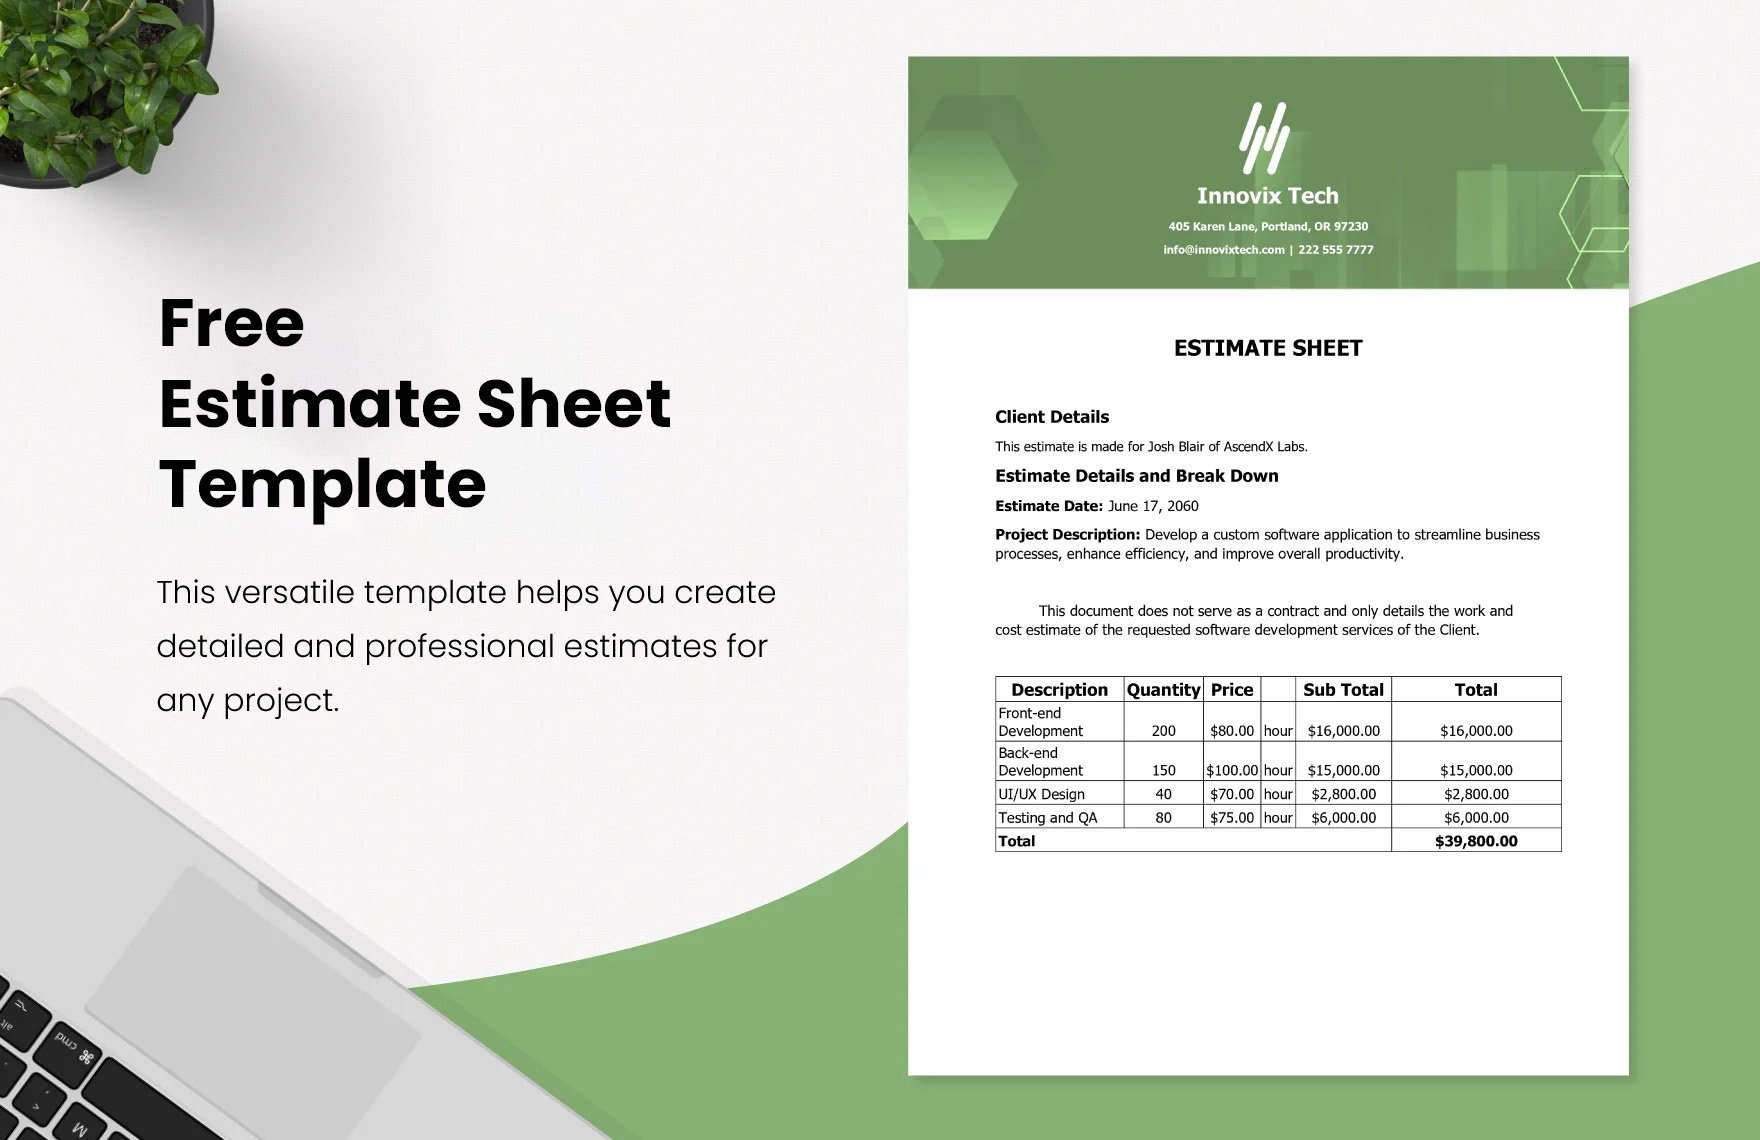 Estimate Sheet Template in Word, Google Docs, PDF